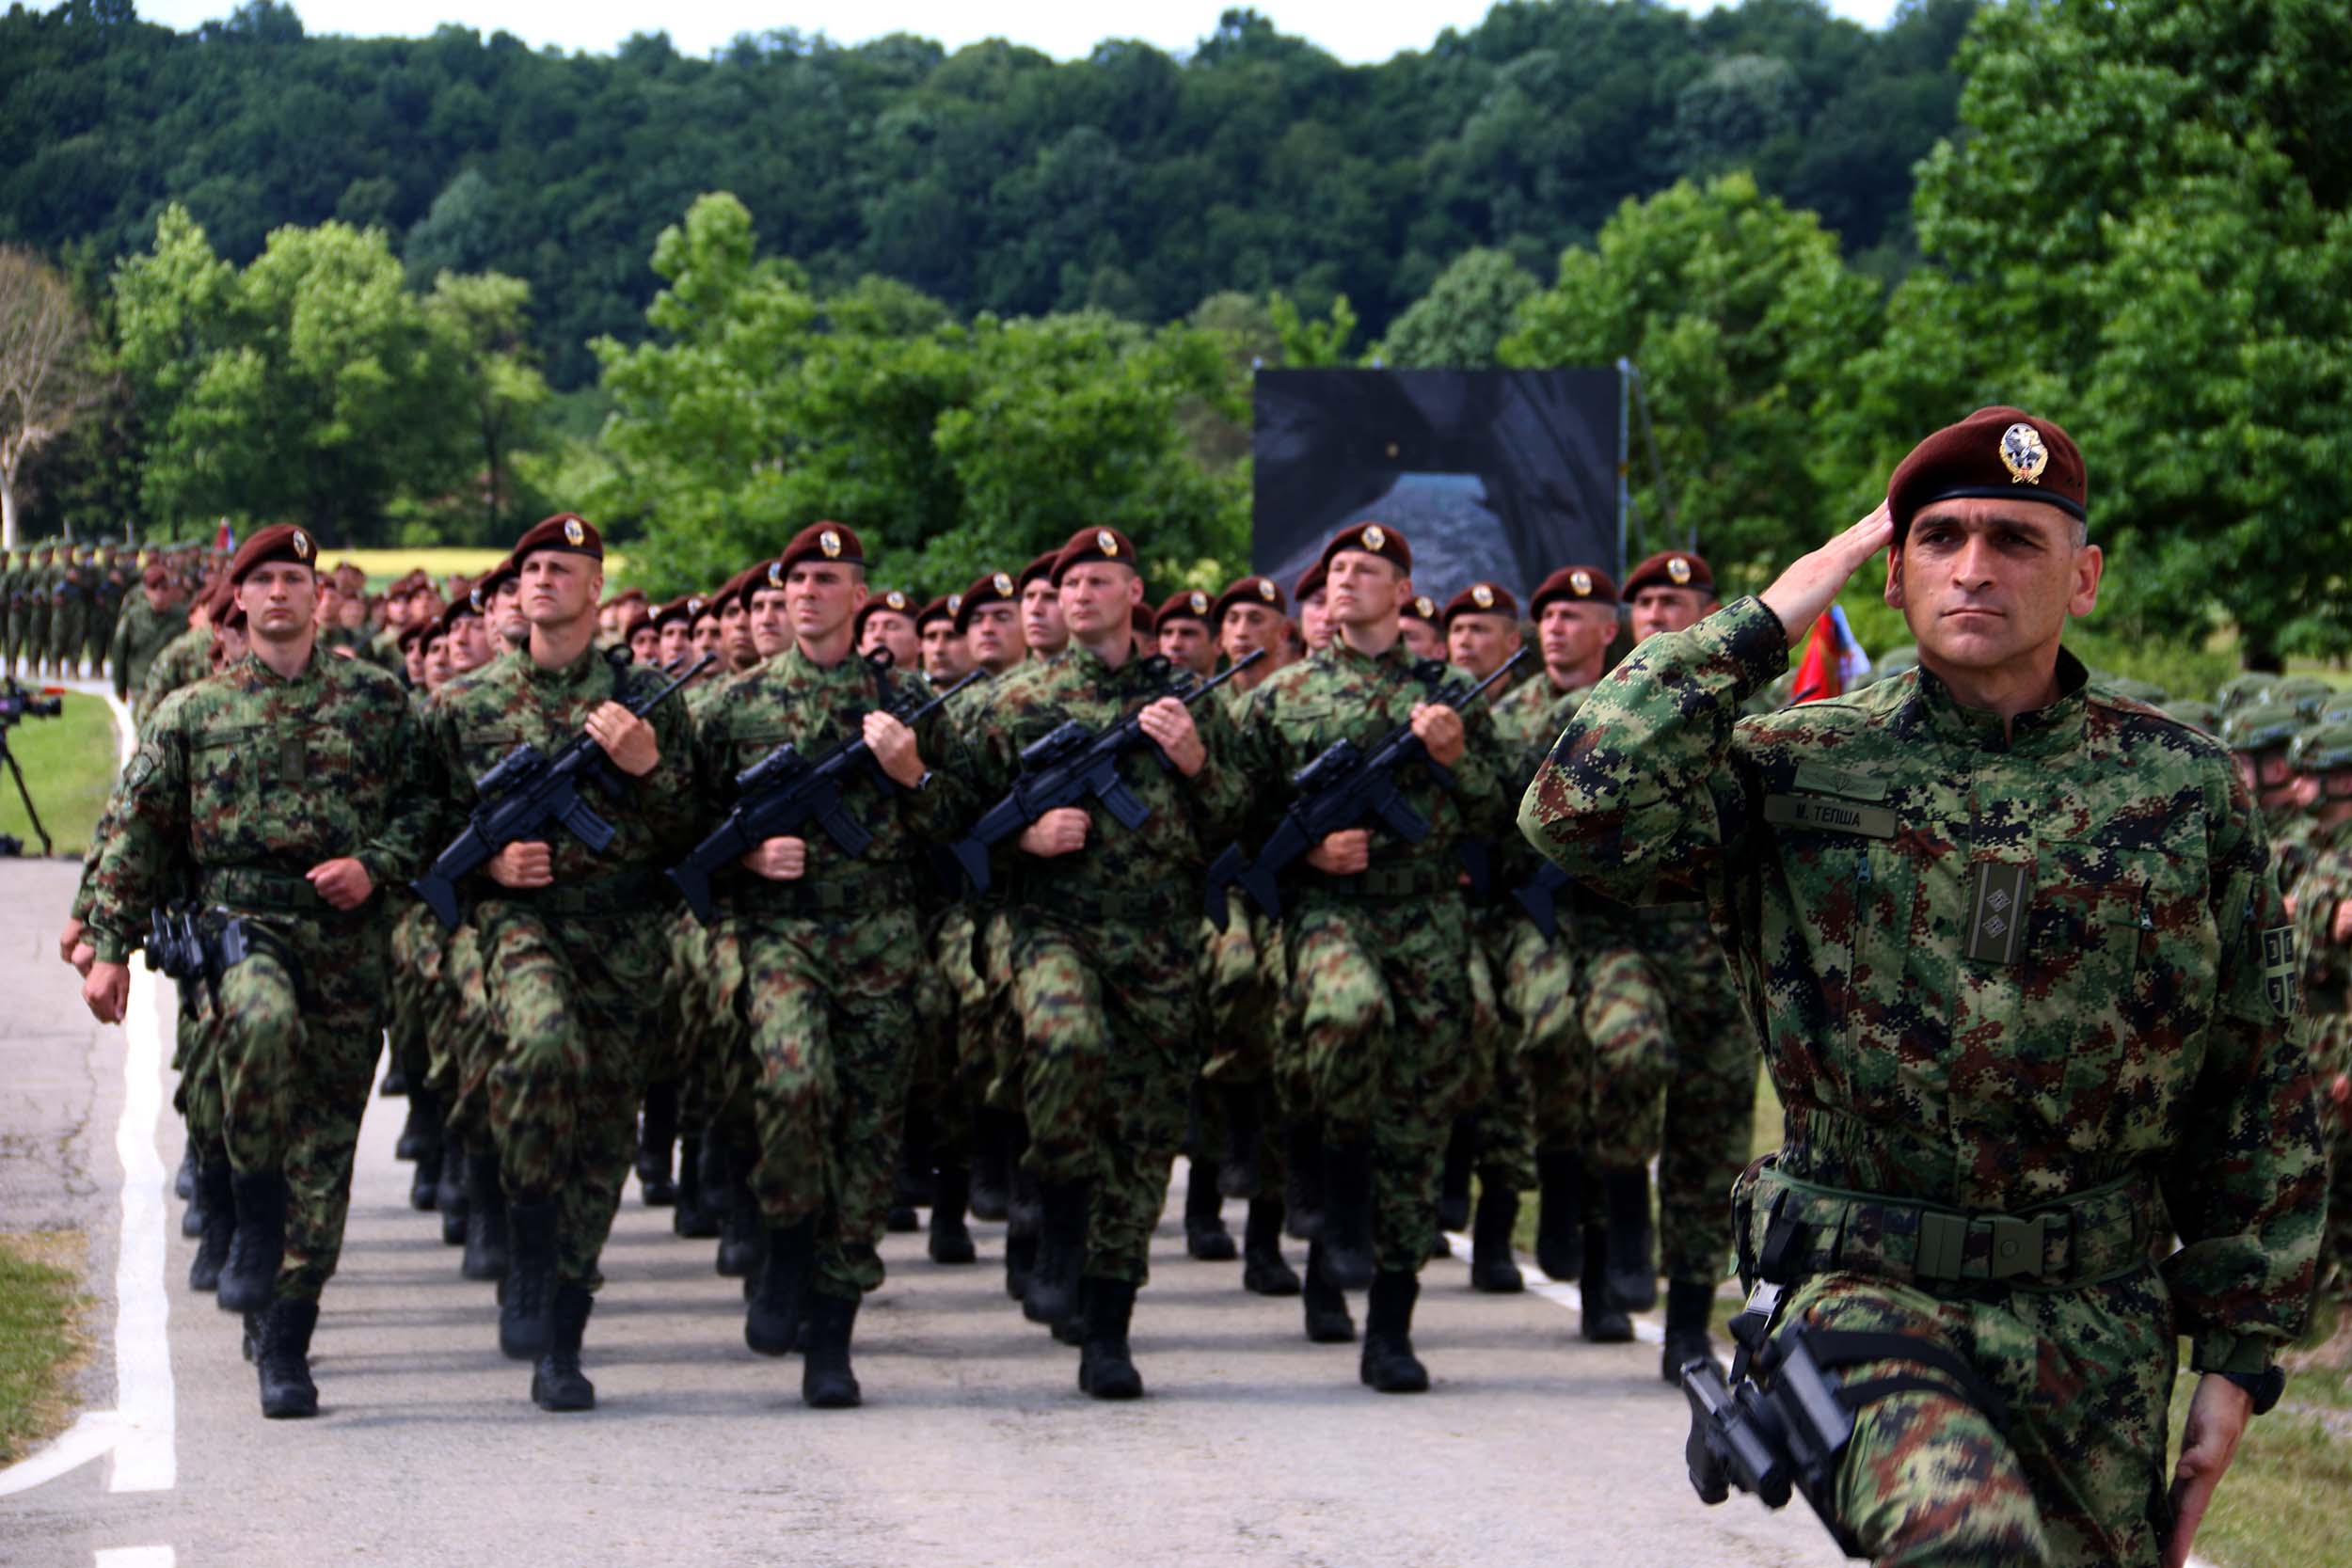 72 Бригада. Застава бригади имени Святого Георгия. 72 Бригада Орр. Специальная бригада Сербии. 21 бригада сво